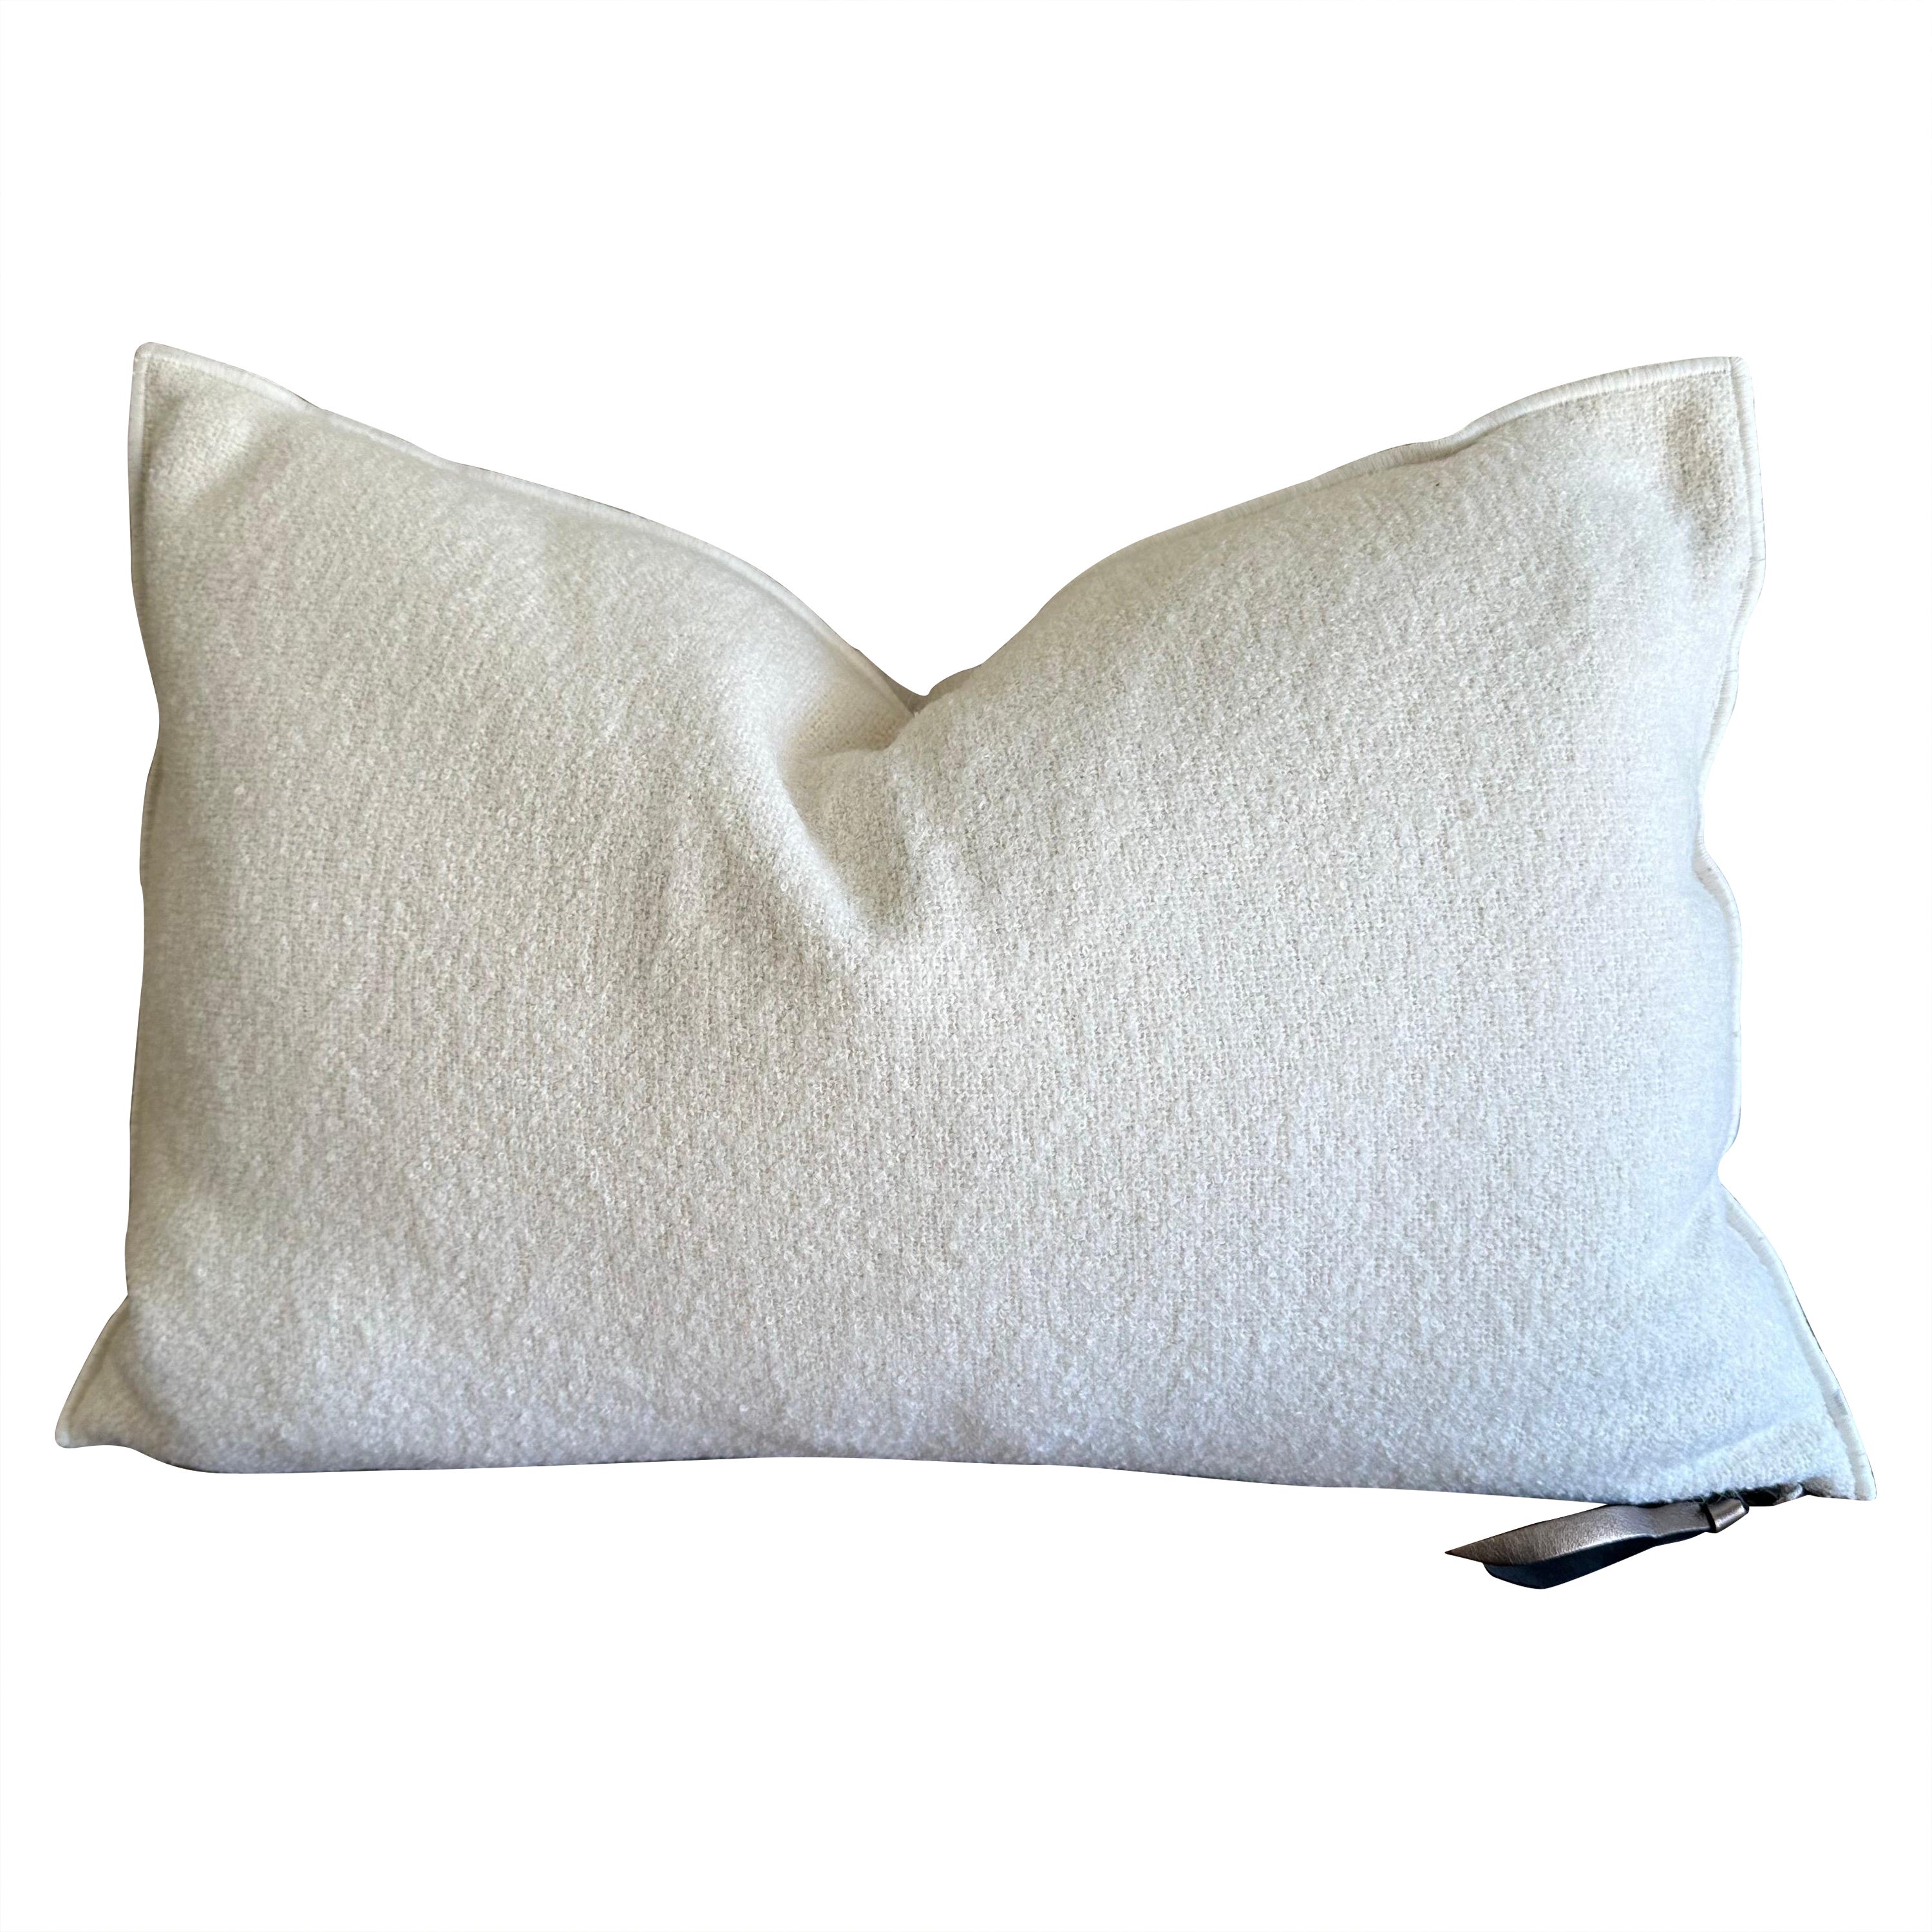 Bouclette French Wool Accent Pillow mit Daunenfederneinsatz